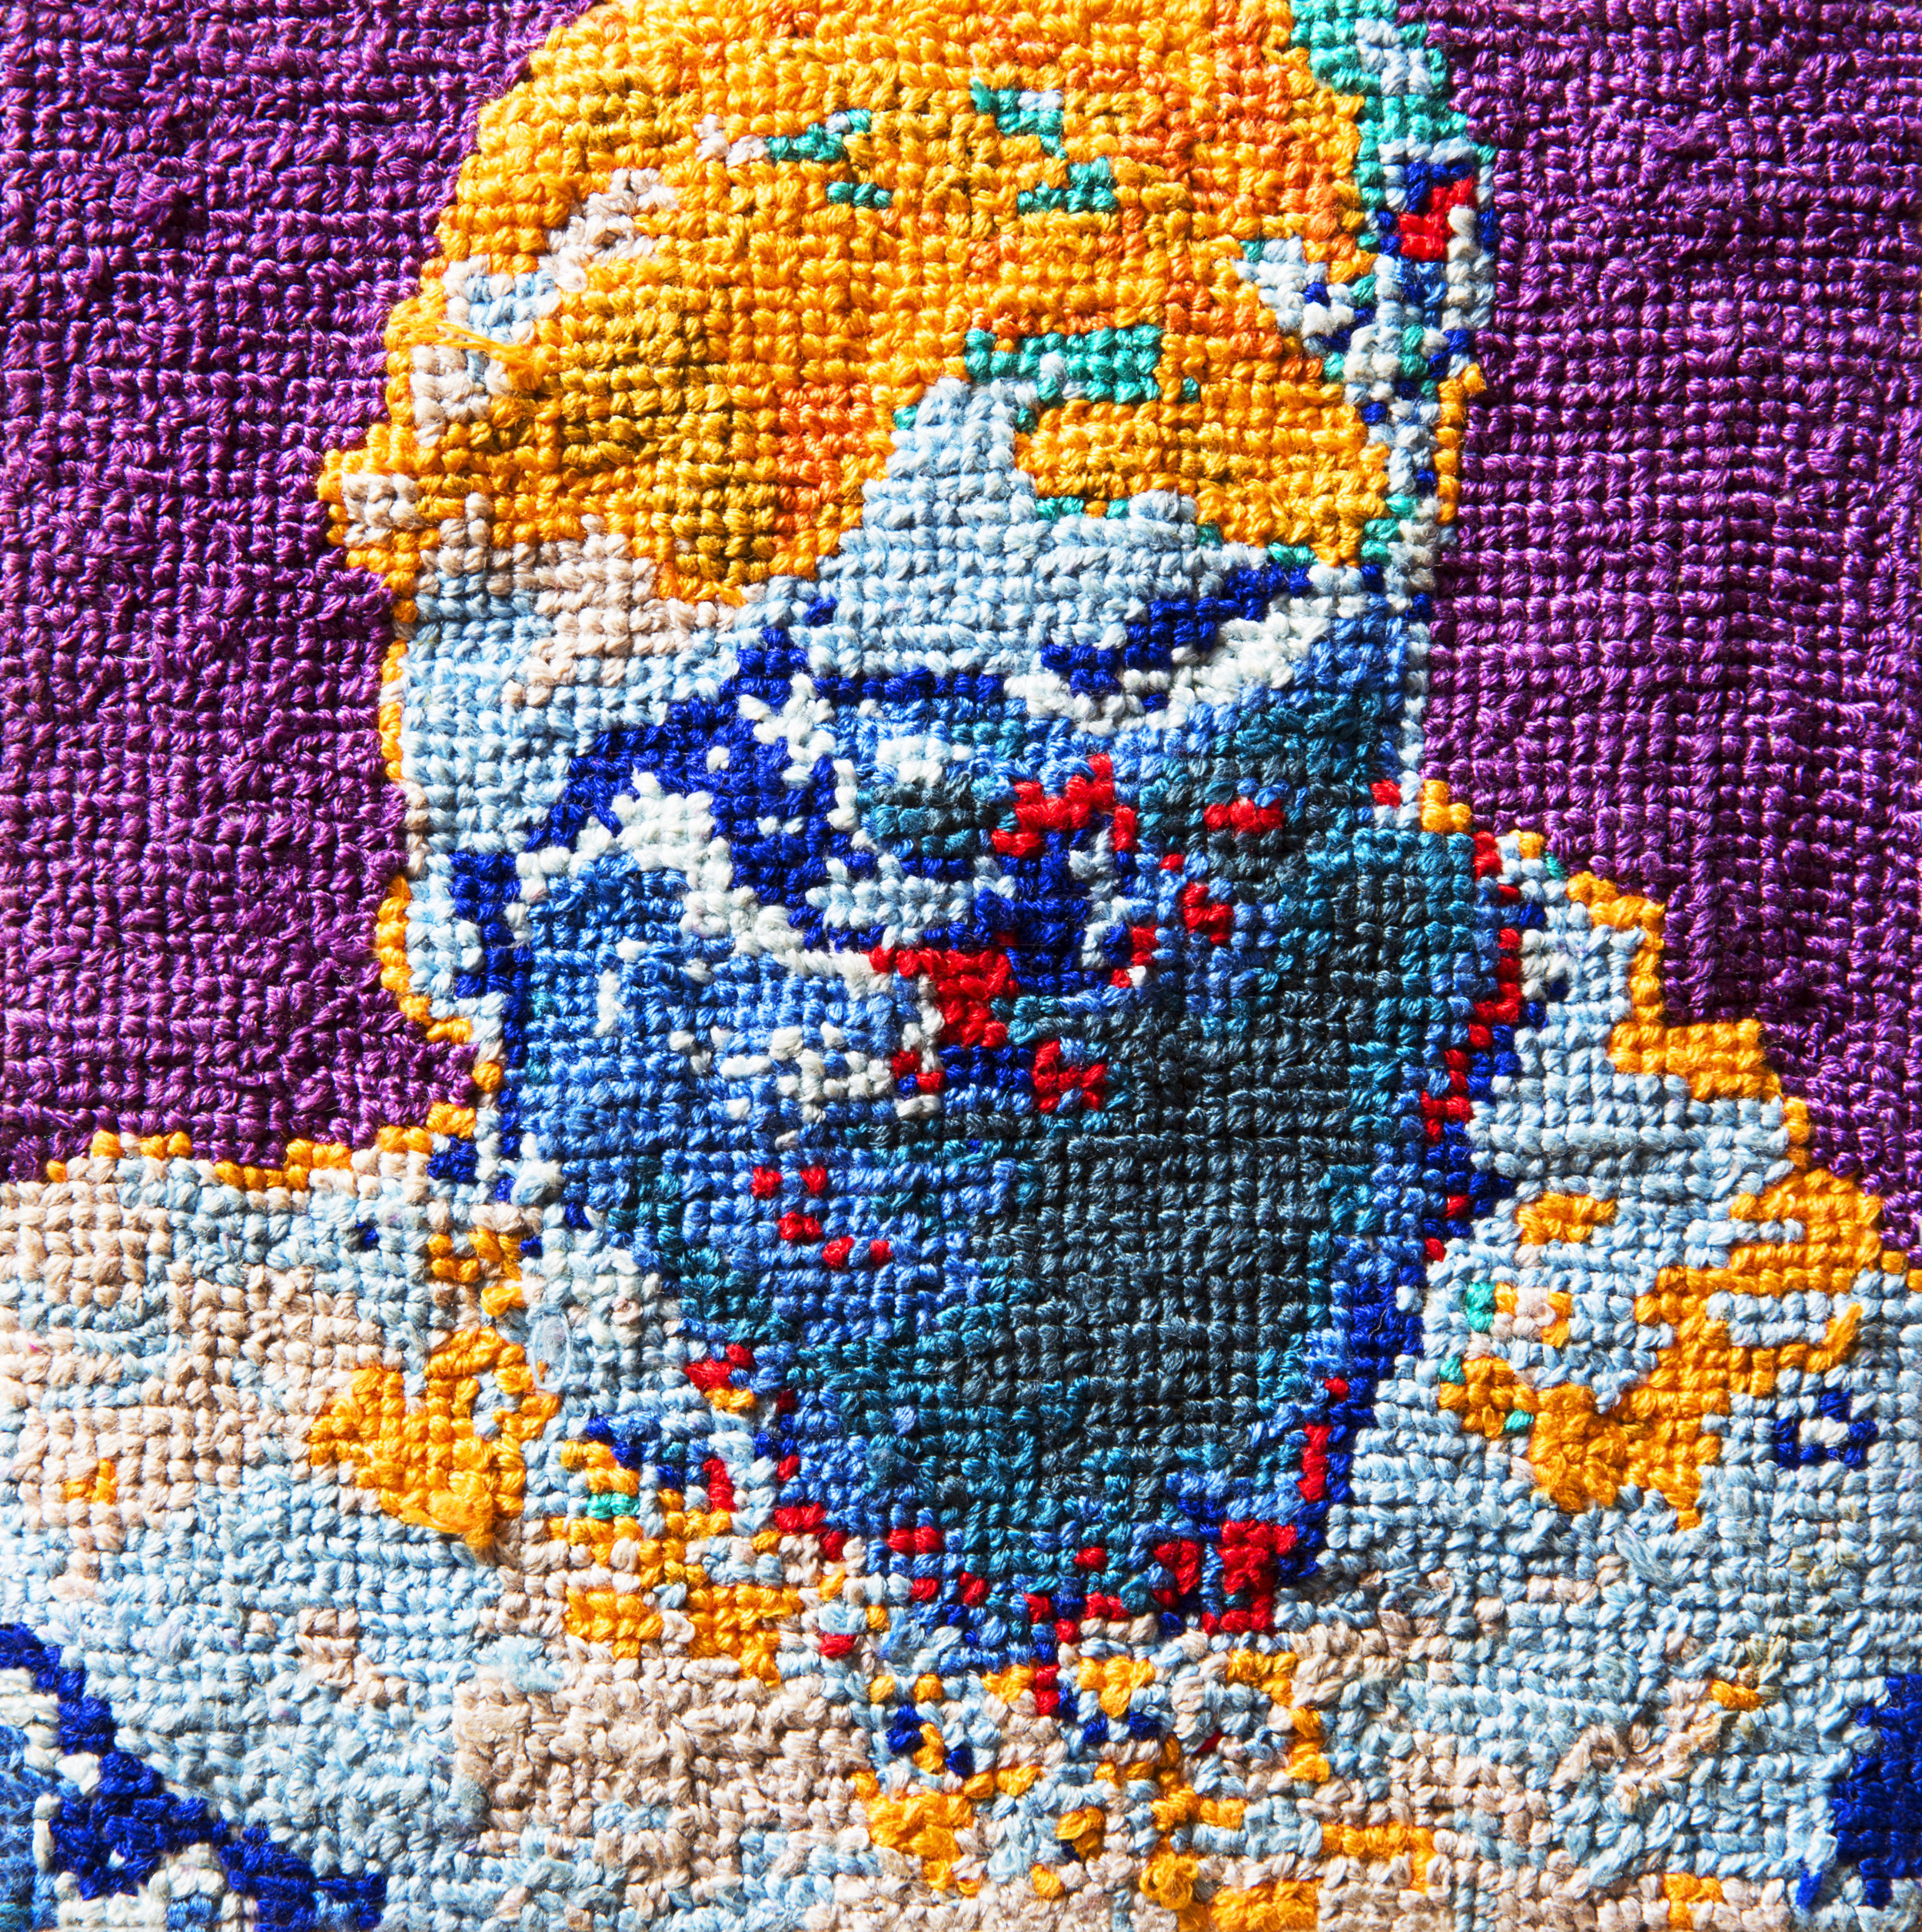   Frame 08   By Brooke Hatfield  5 x 5 inches  Cotton thread on aida cloth  2013 